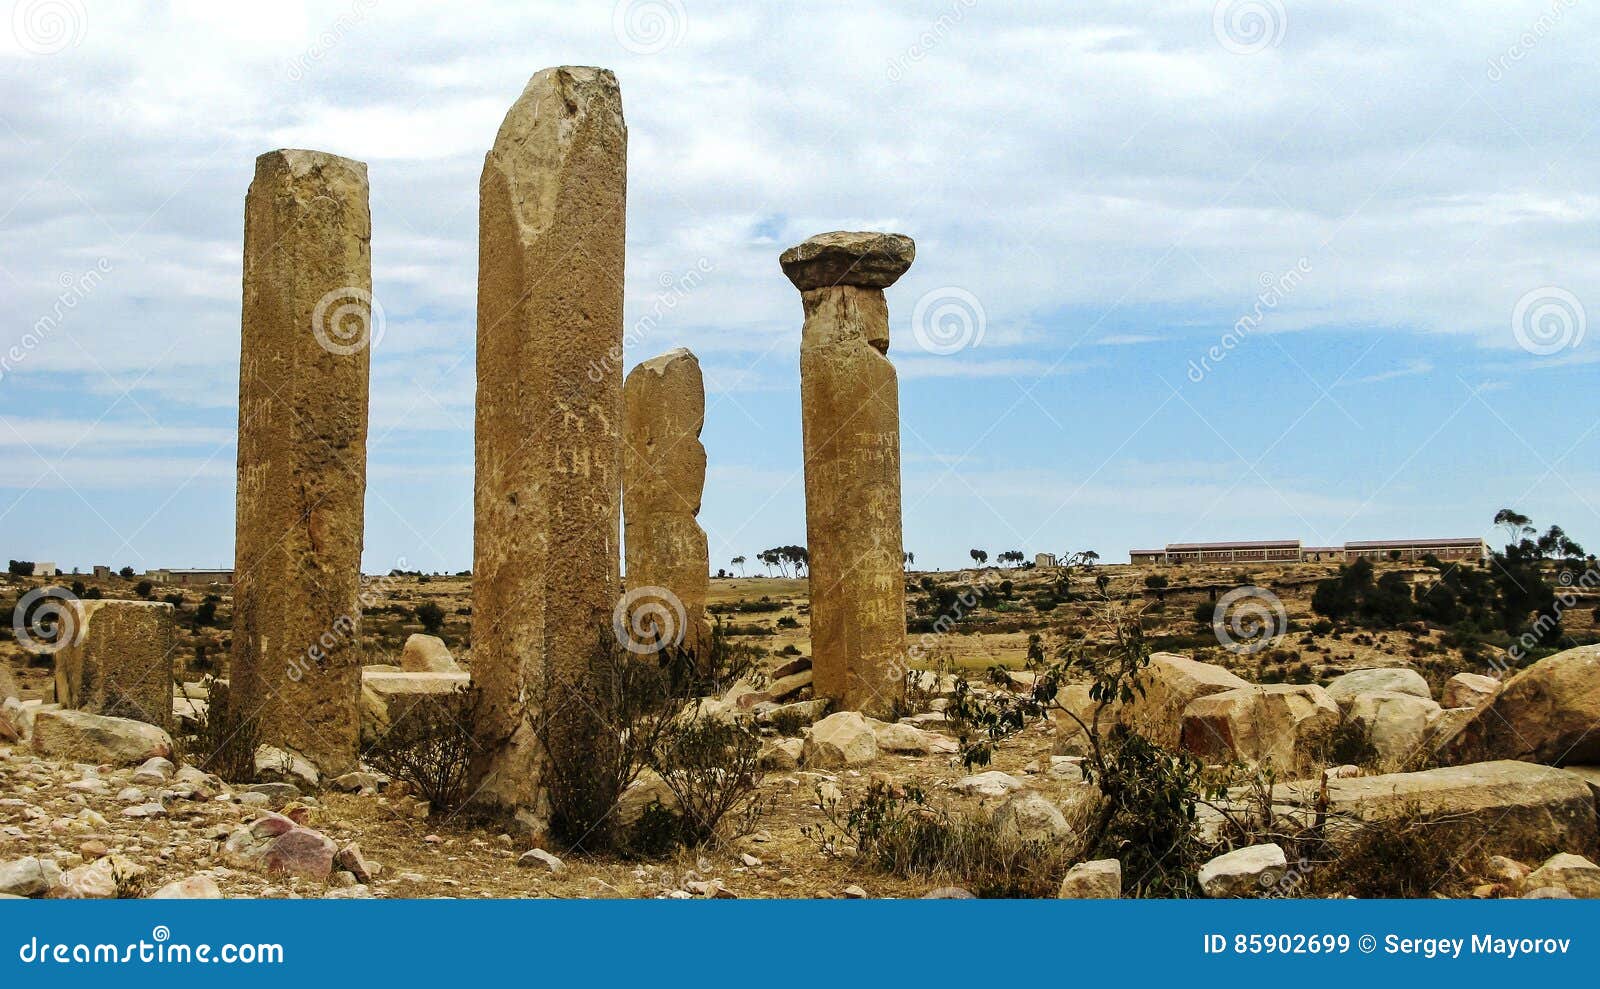 ruined temple of mariam wakino in qohaito ancient city eritrea